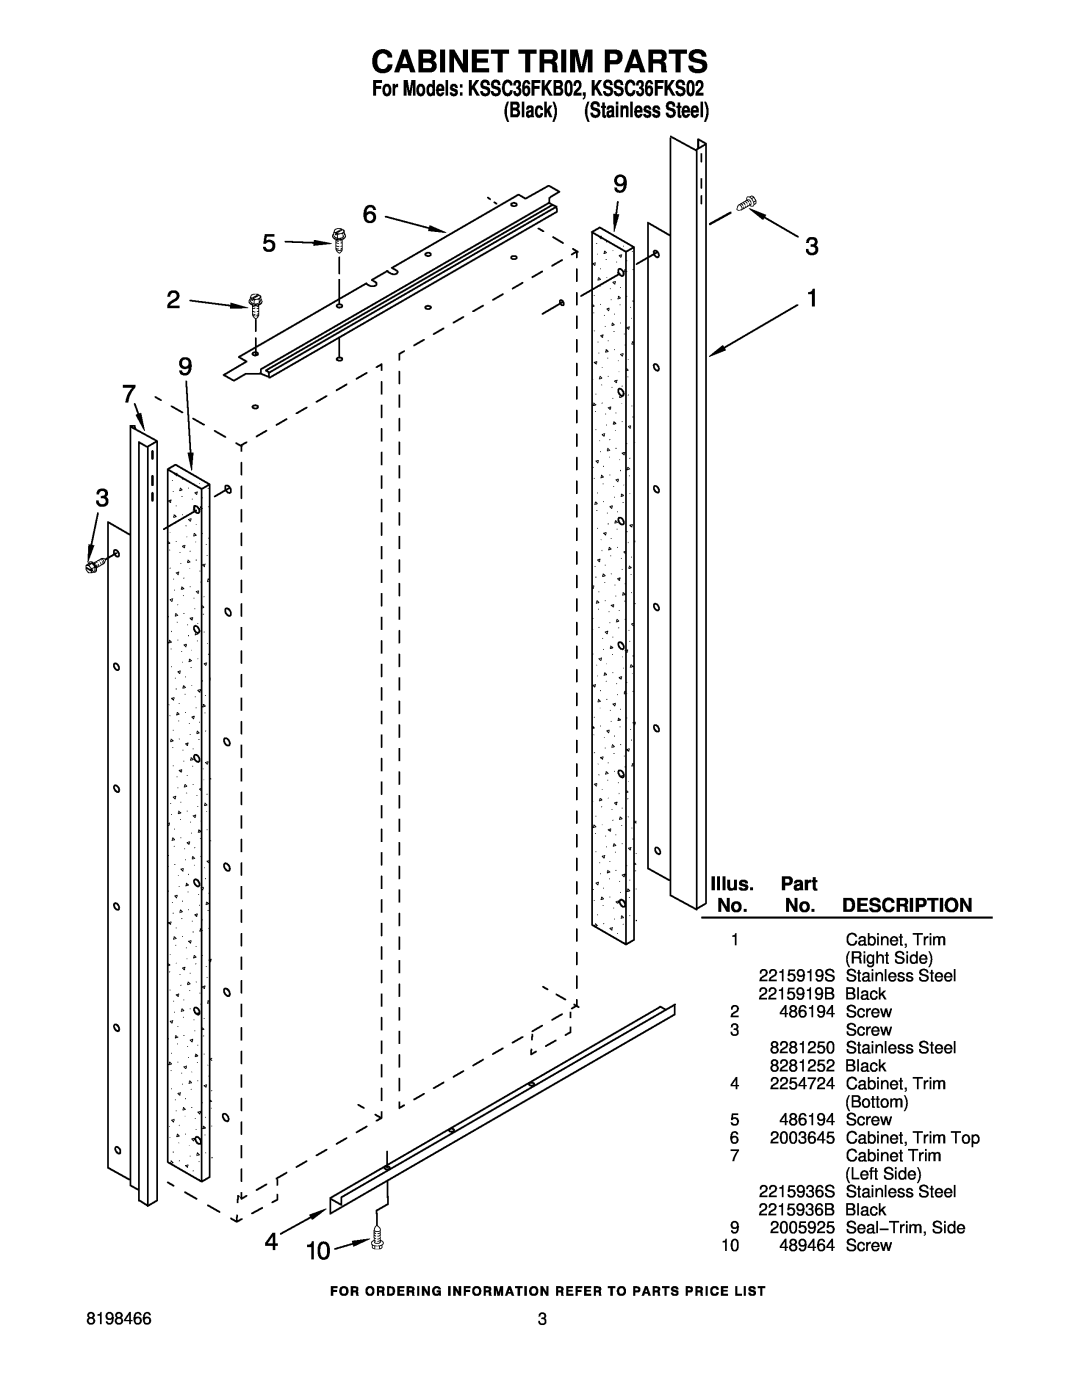 KitchenAid manual Cabinet Trim Parts, For Models KSSC36FKB02, KSSC36FKS02 Black Stainless Steel, Illus, Description 